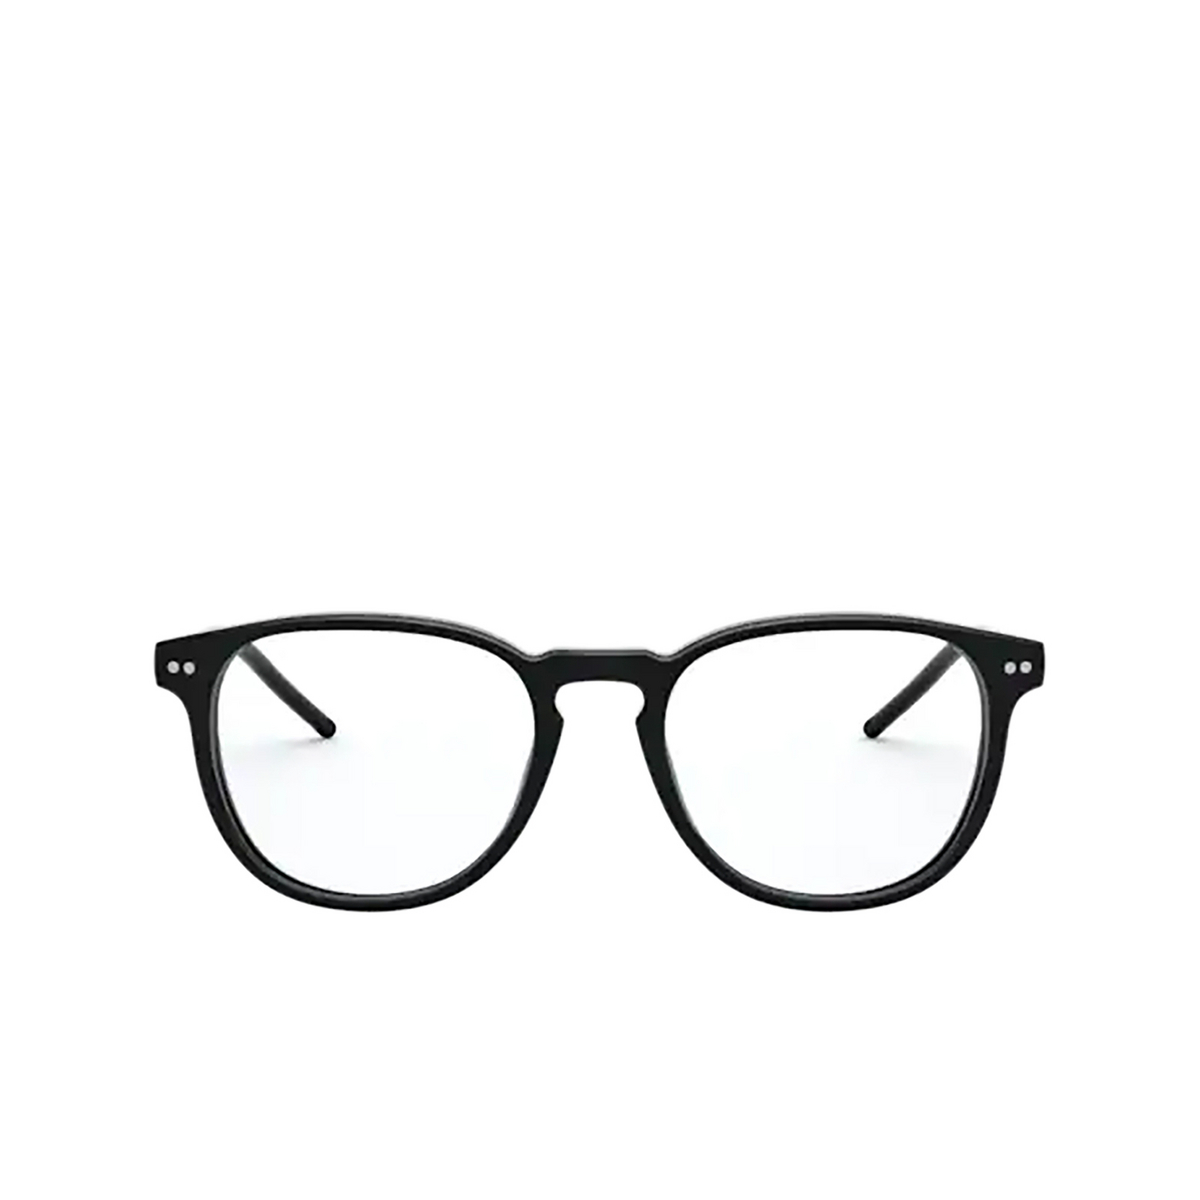 Polo Ralph Lauren® Square Eyeglasses: PH2225 color Shiny Black 5001 - front view.